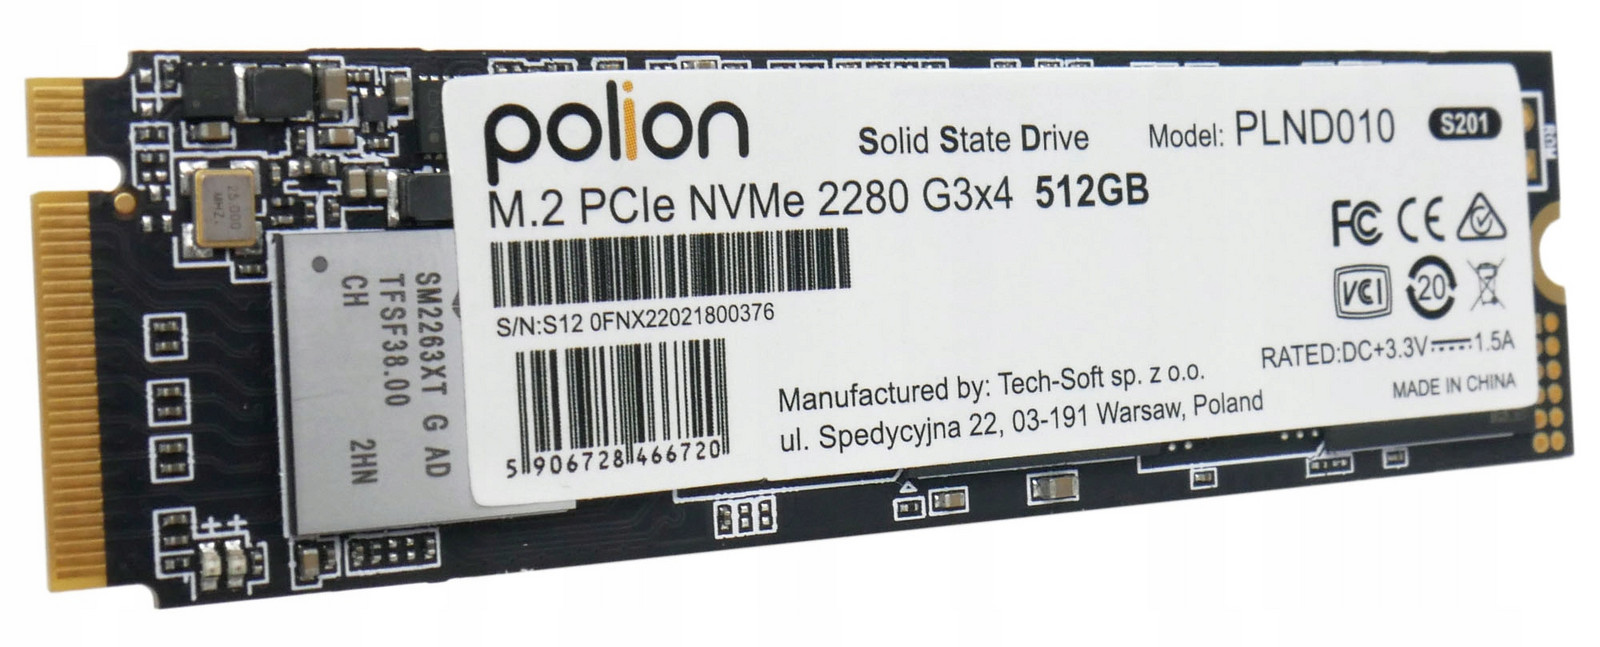 Polion Ssd M.2 PCIe NVMe disk 512GB 2200MB/s